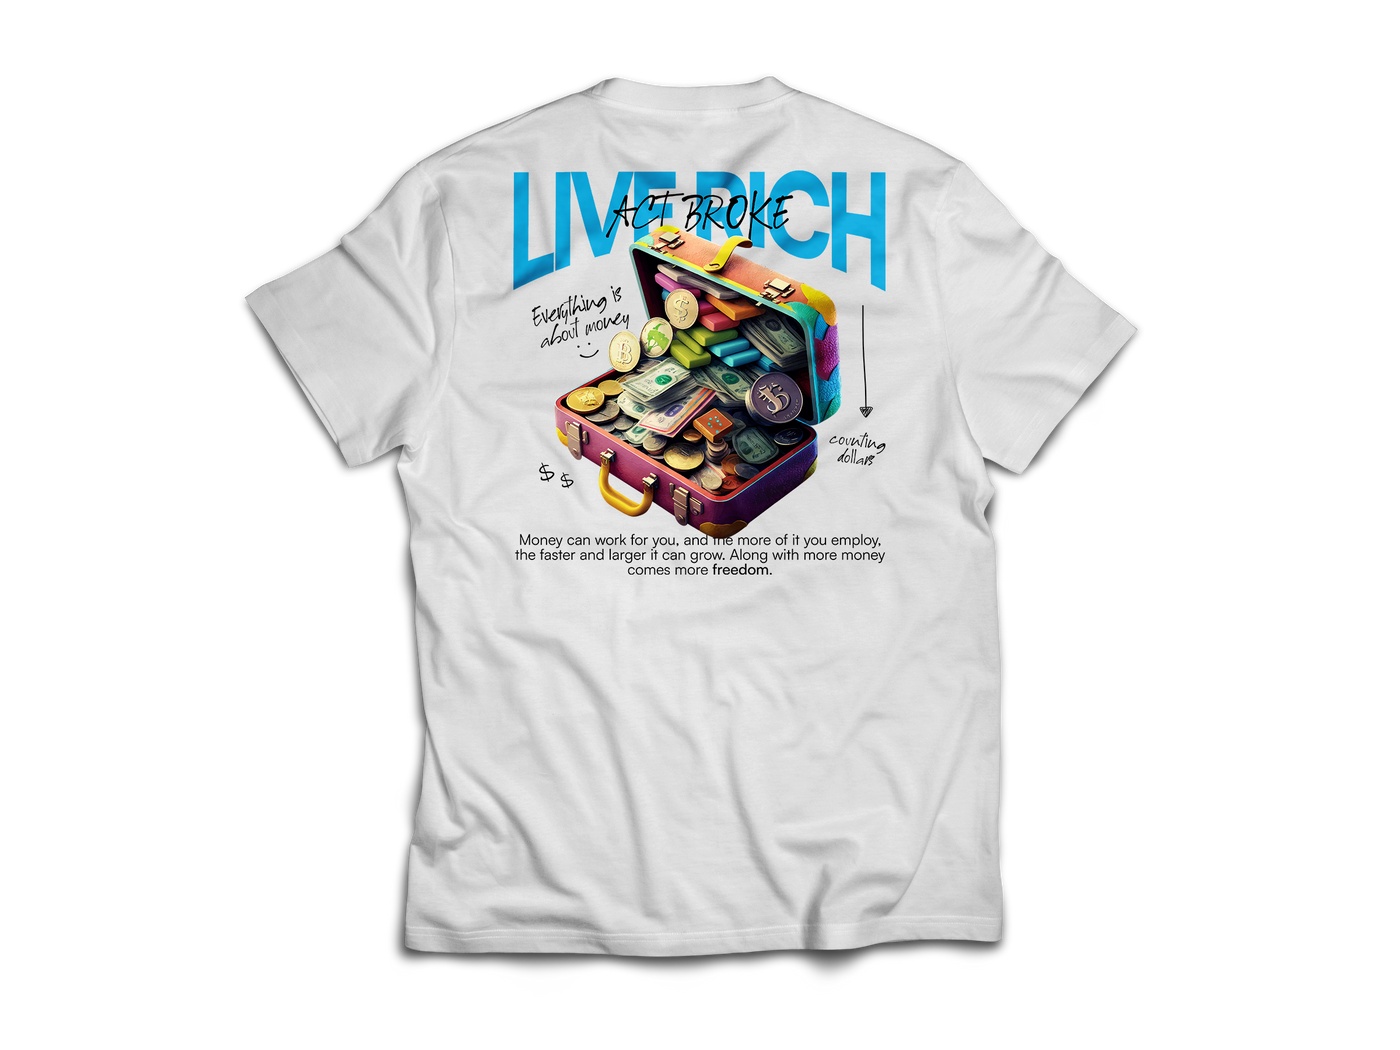 Live Rich Tee ABLR Clothing